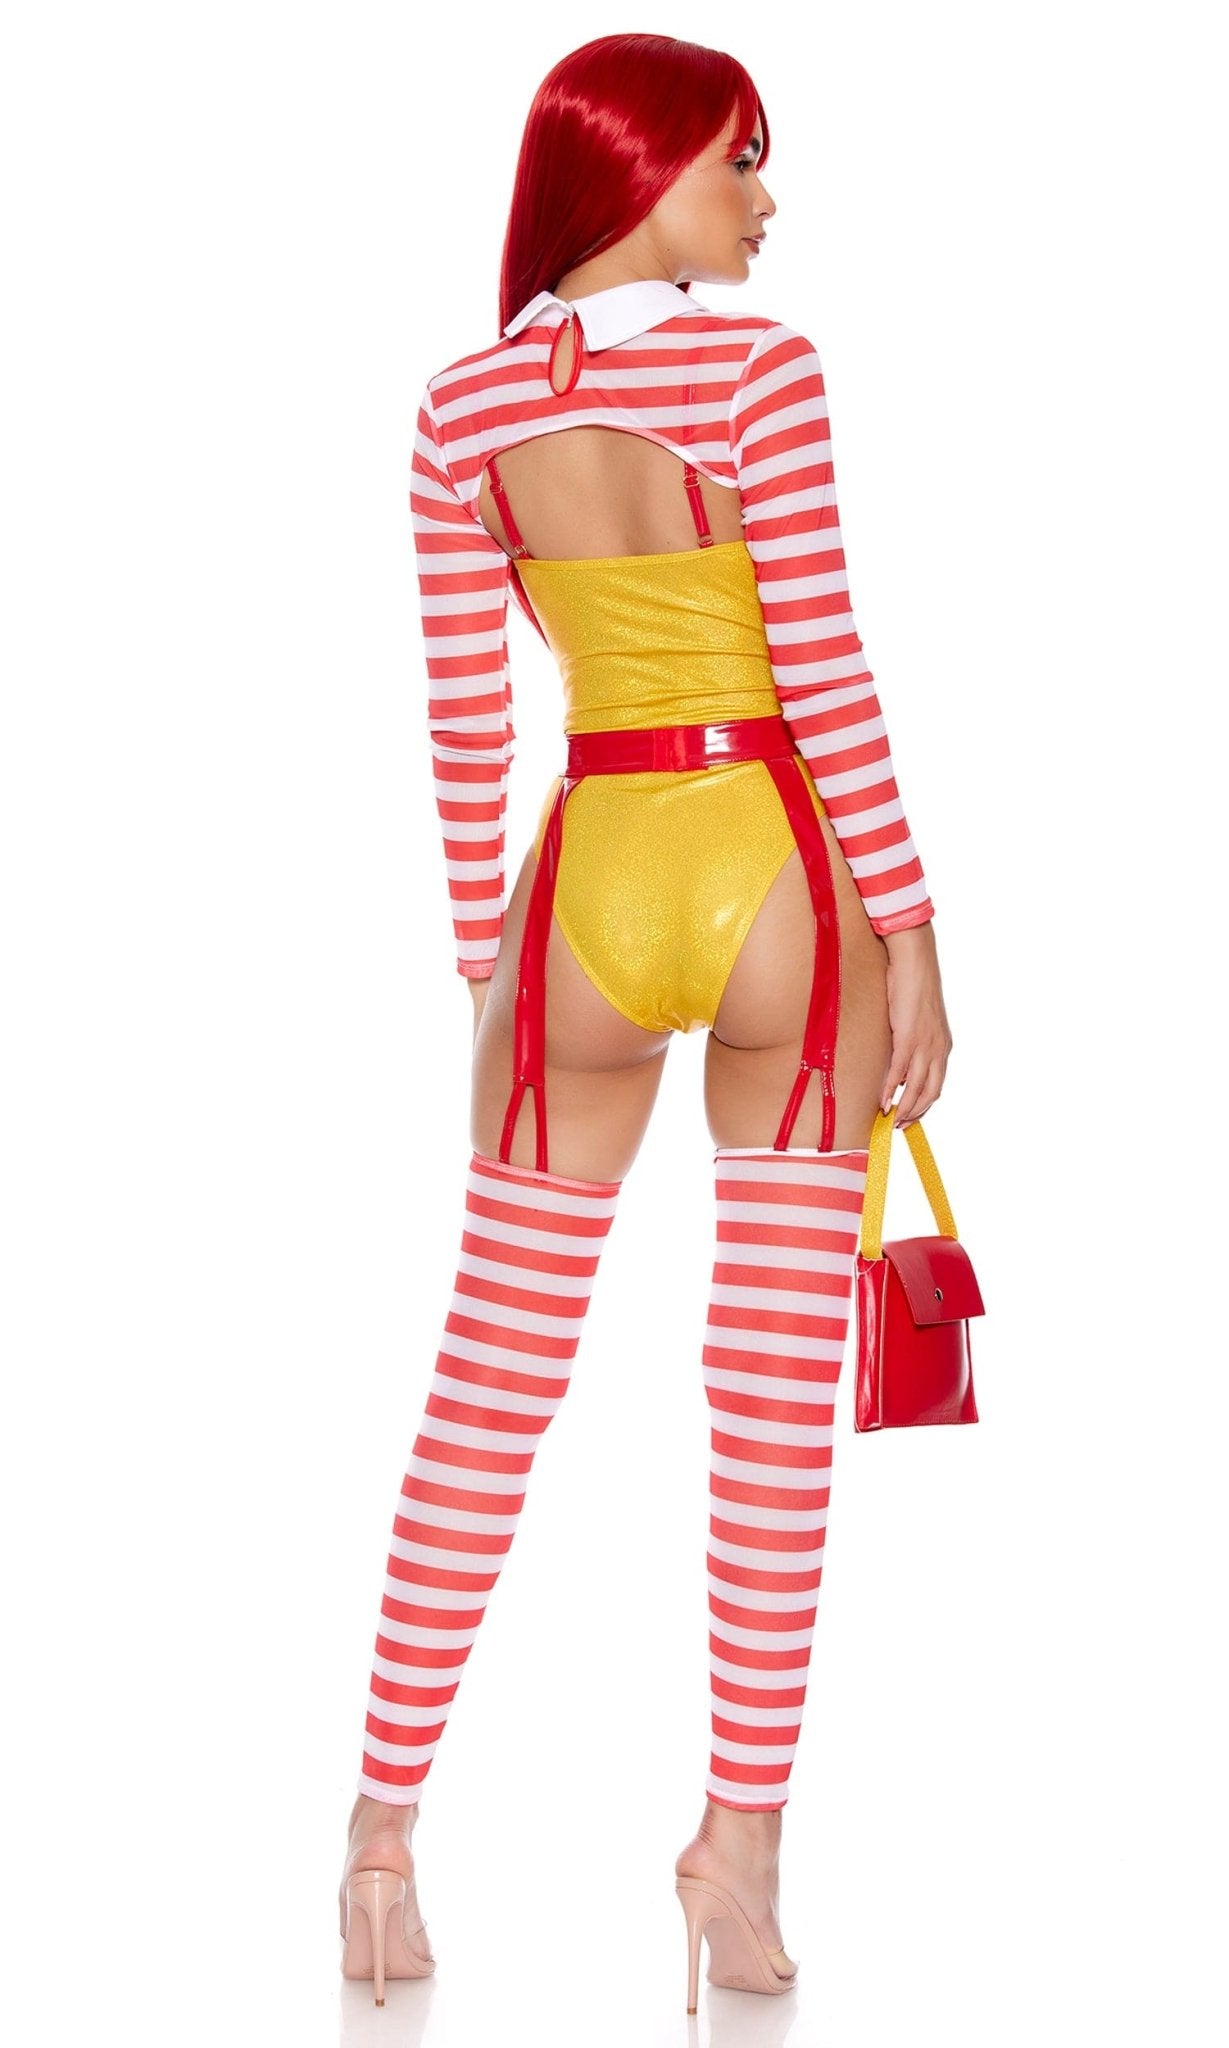 Sexy Mc Girl Halloween Costume Musotica.com